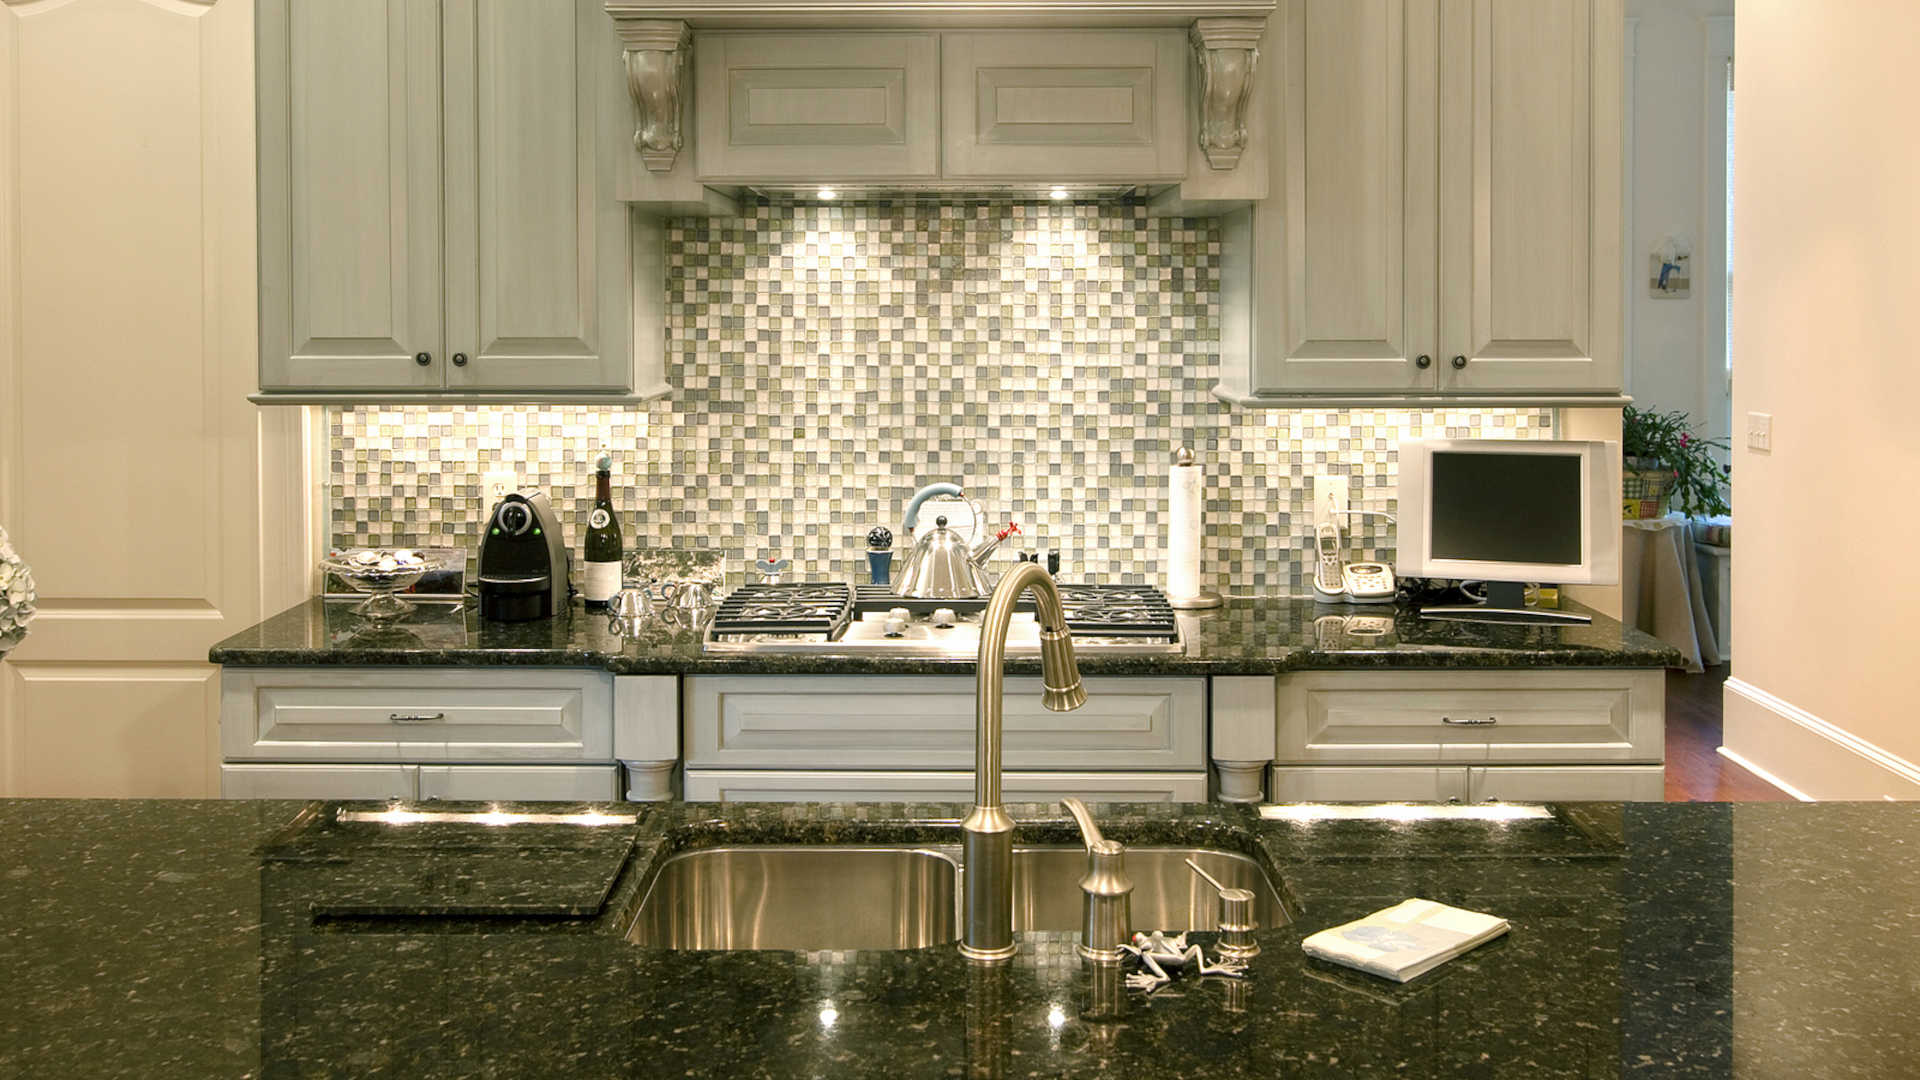 Beautiful kitchen with glass backsplash and clean granite countertop